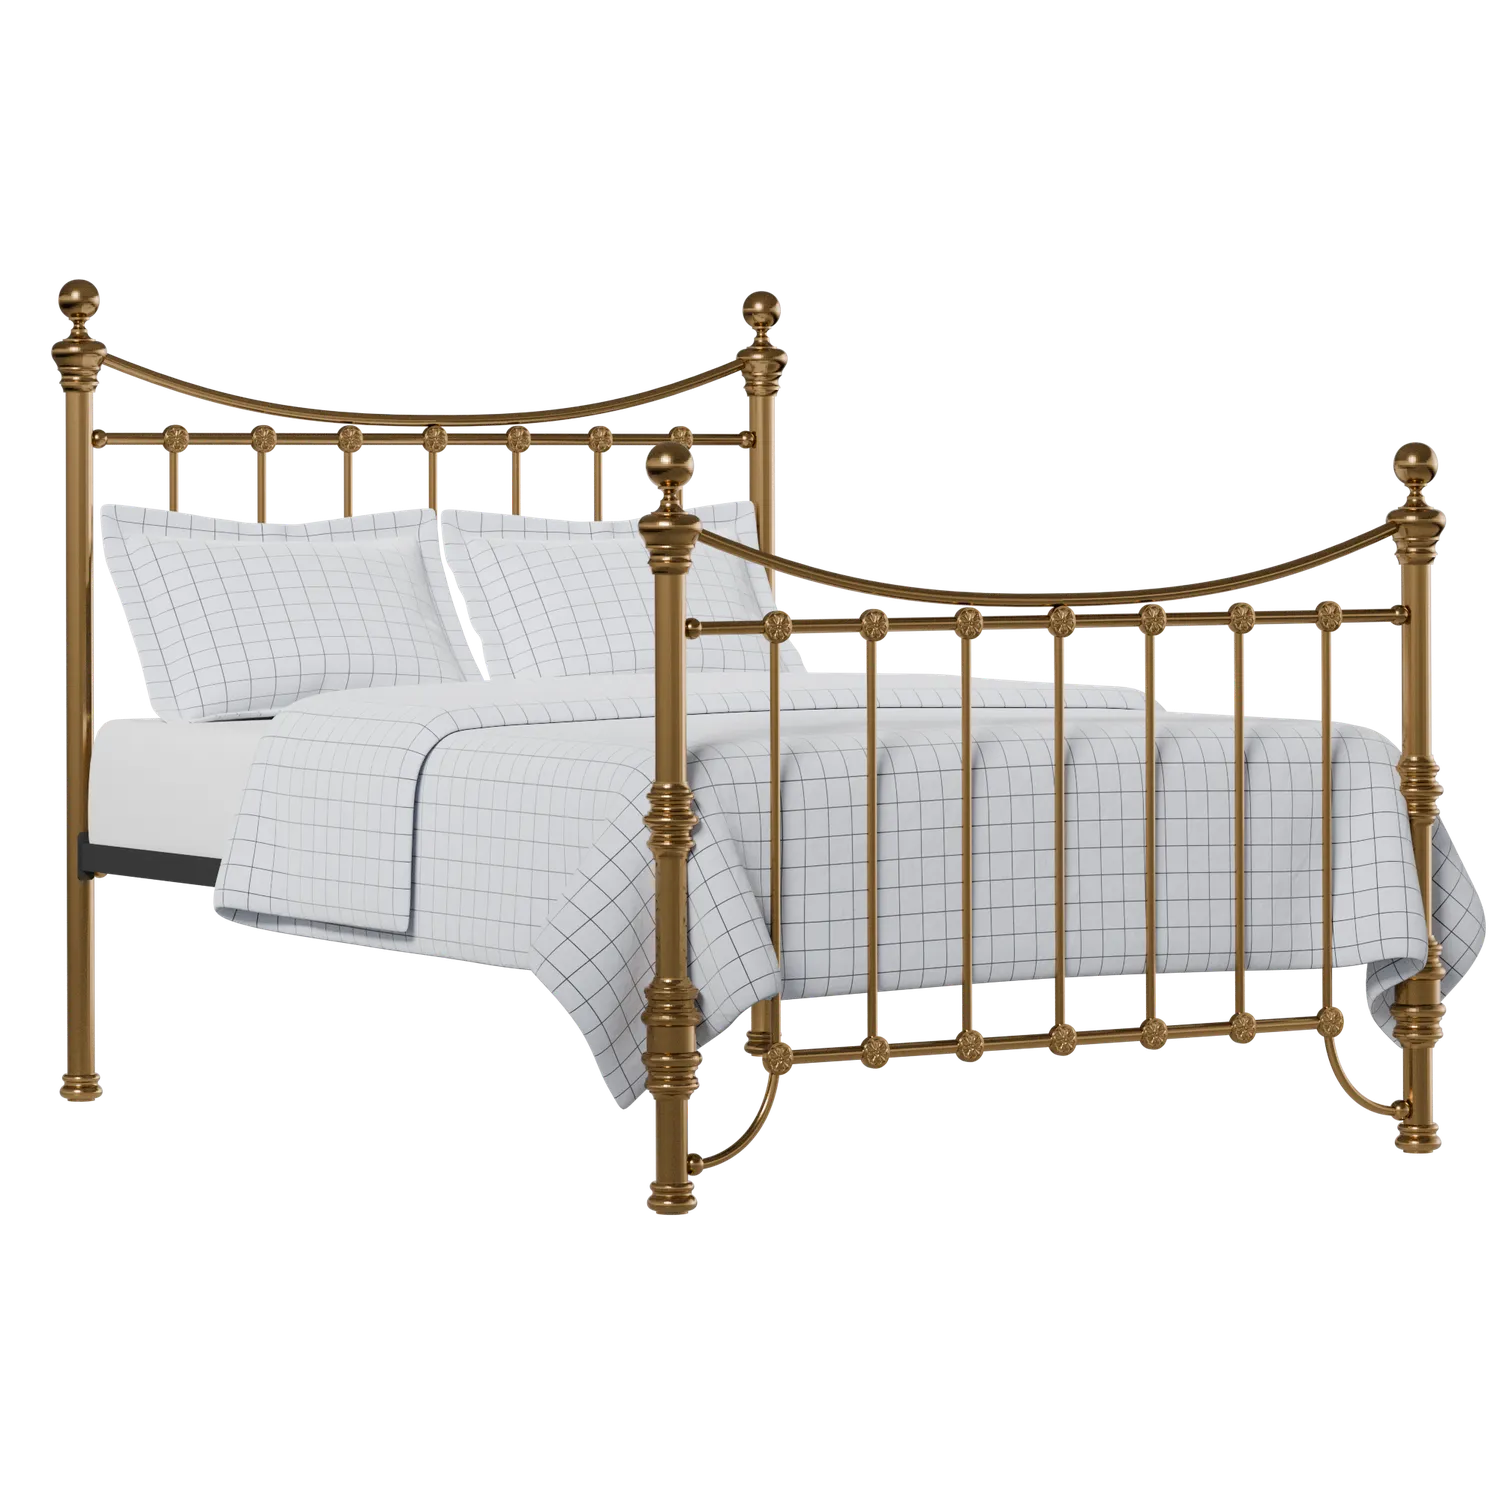 Arran brass bed with Juno mattress